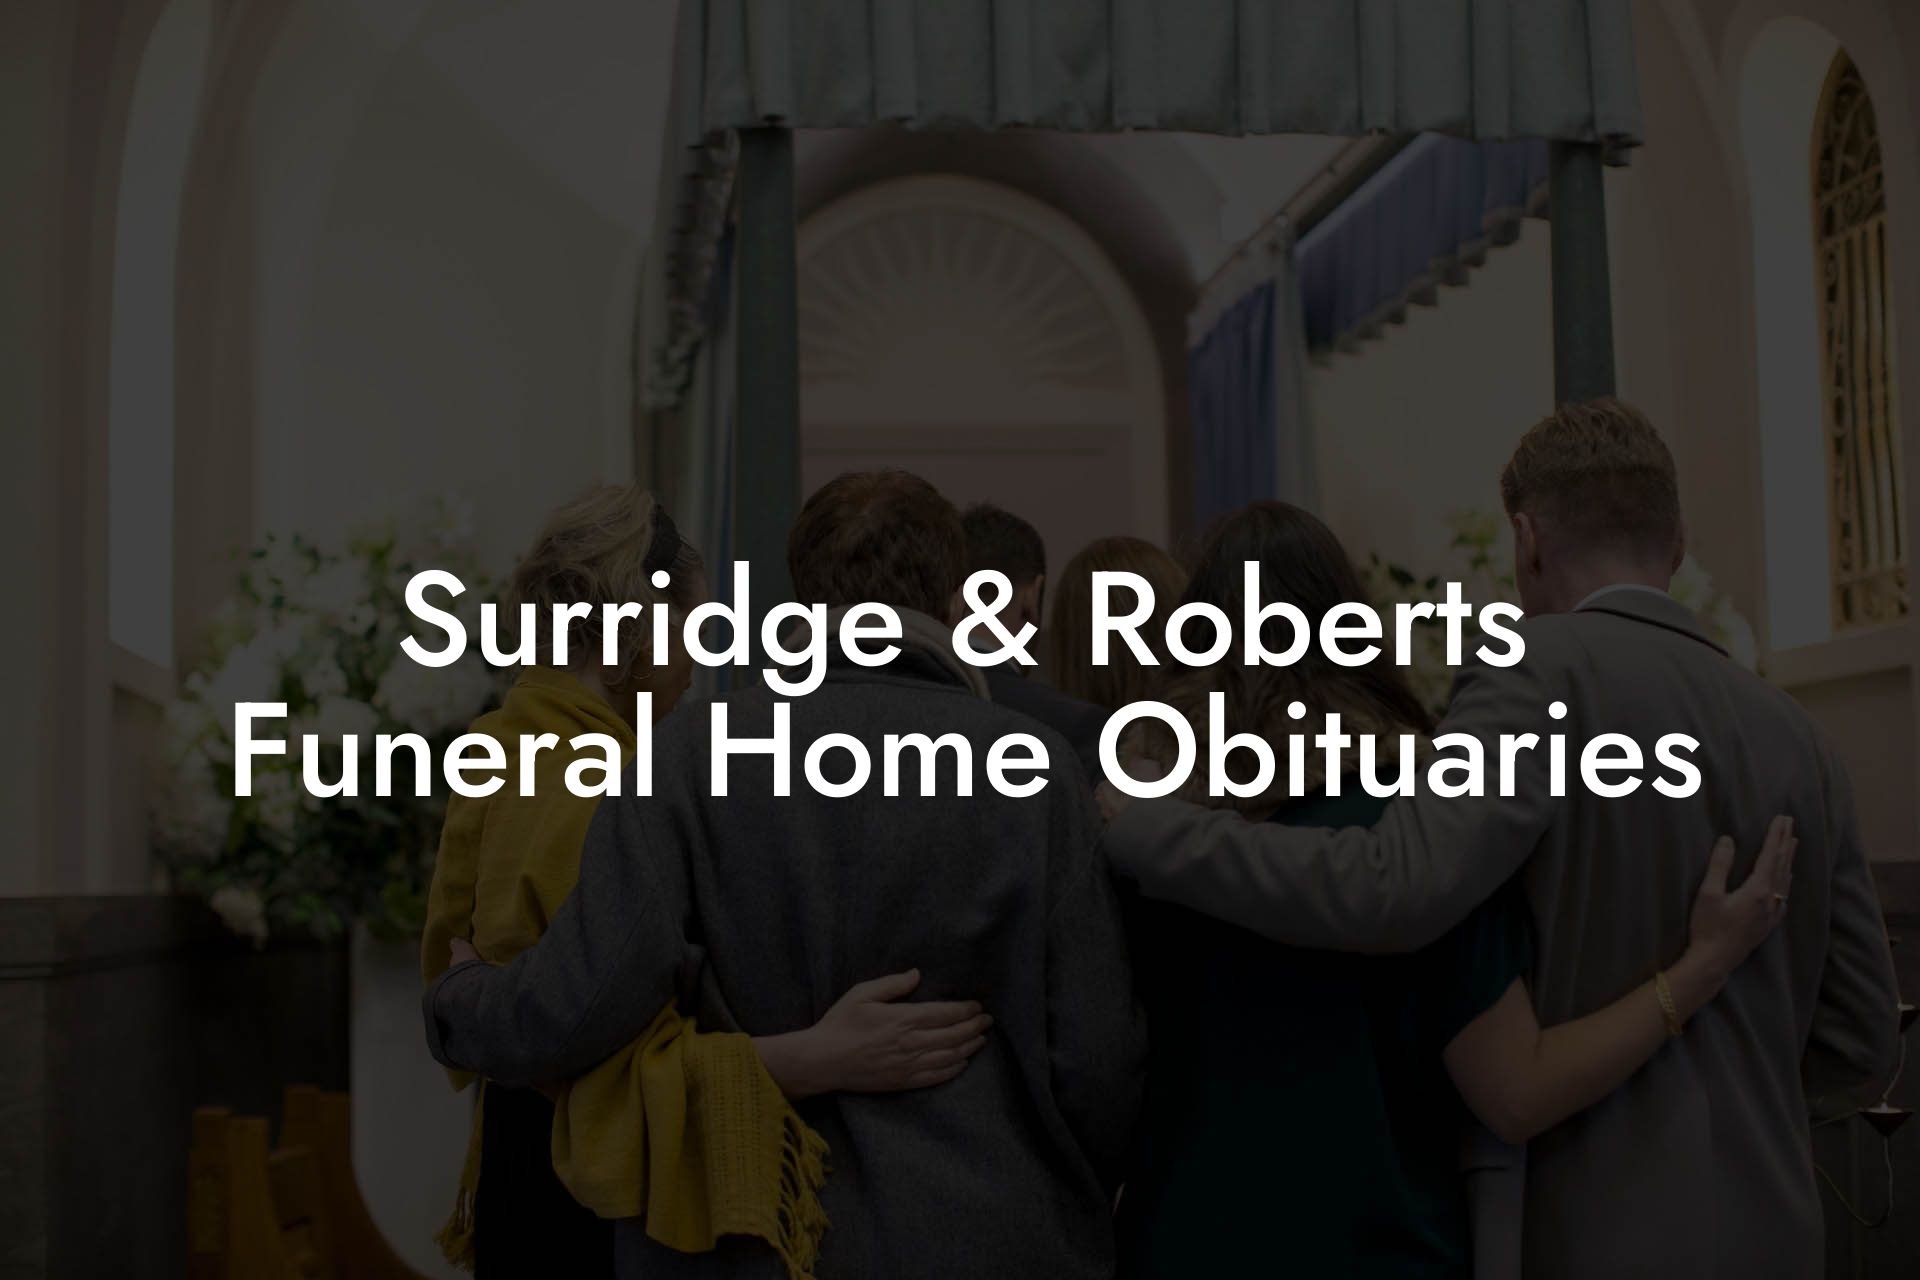 Surridge & Roberts Funeral Home Obituaries